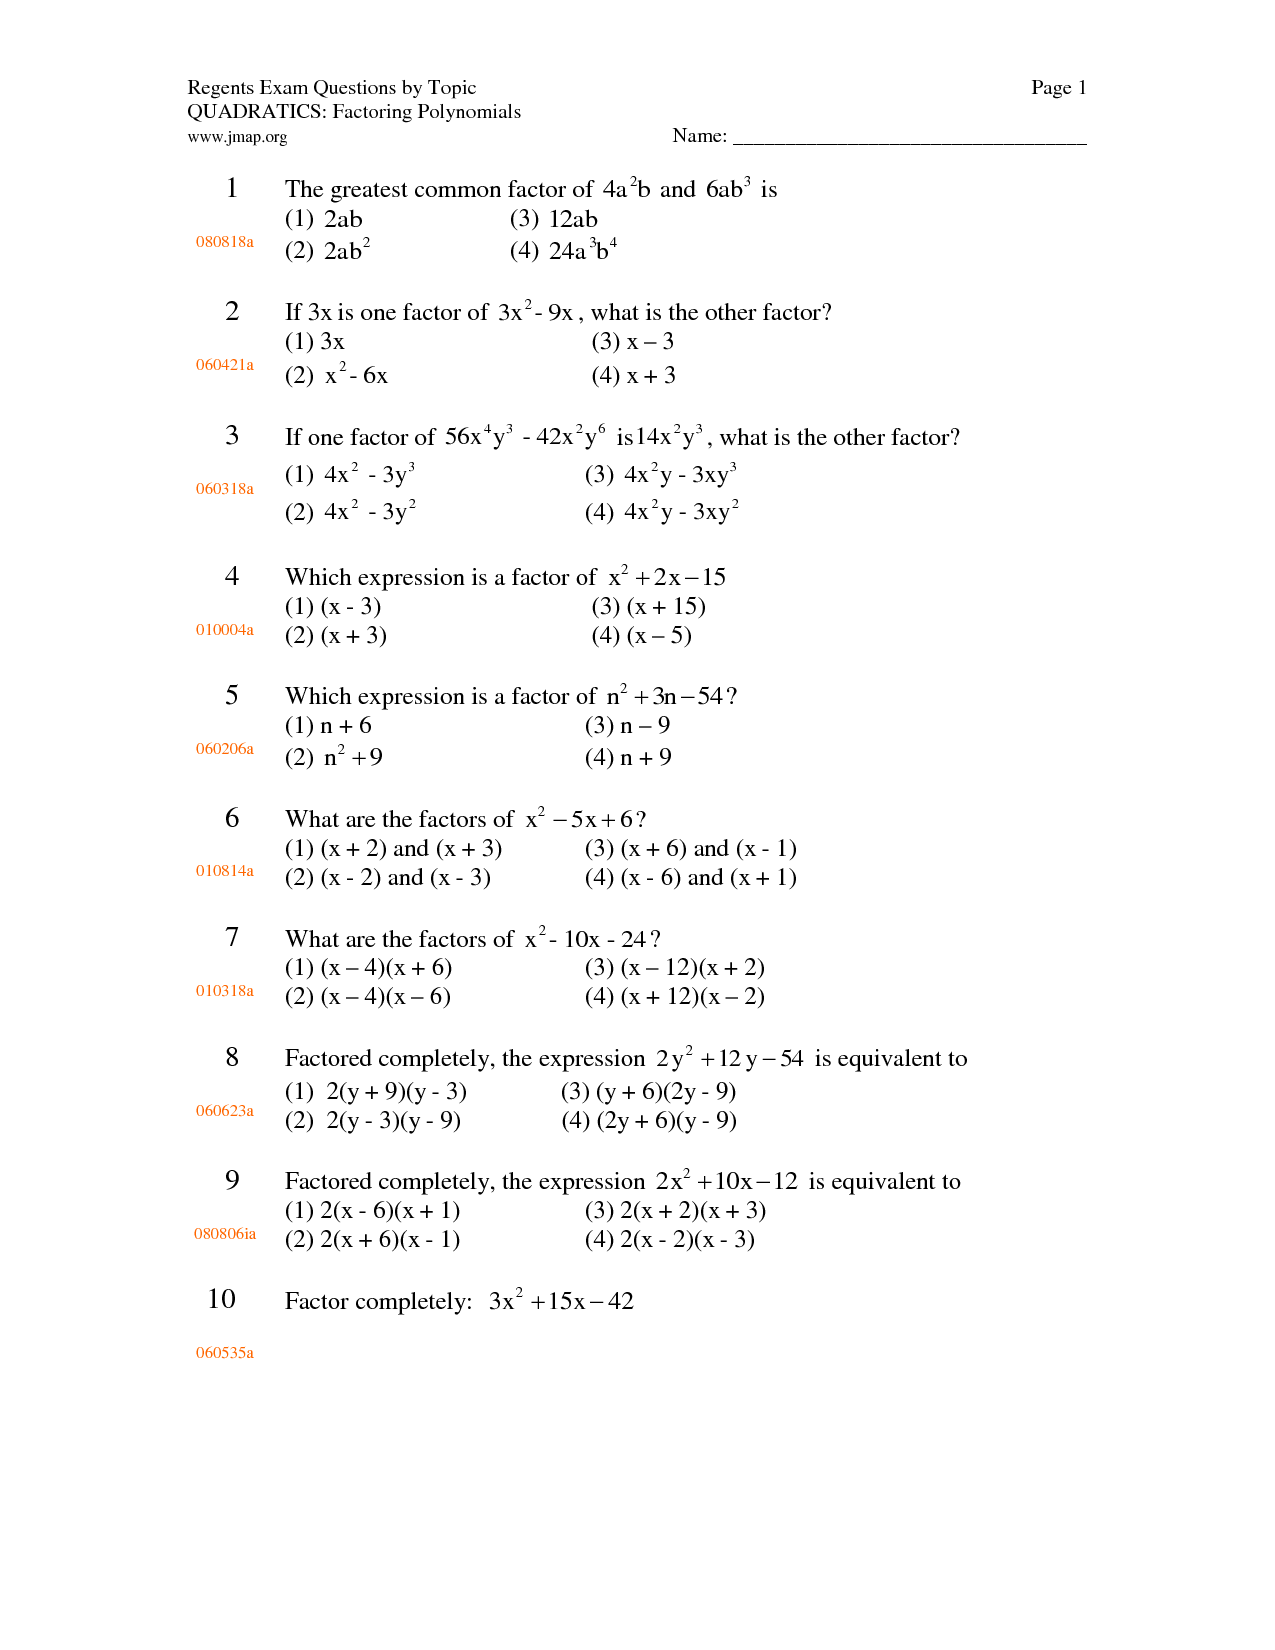 Algebra Factoring Polynomials Worksheet Image